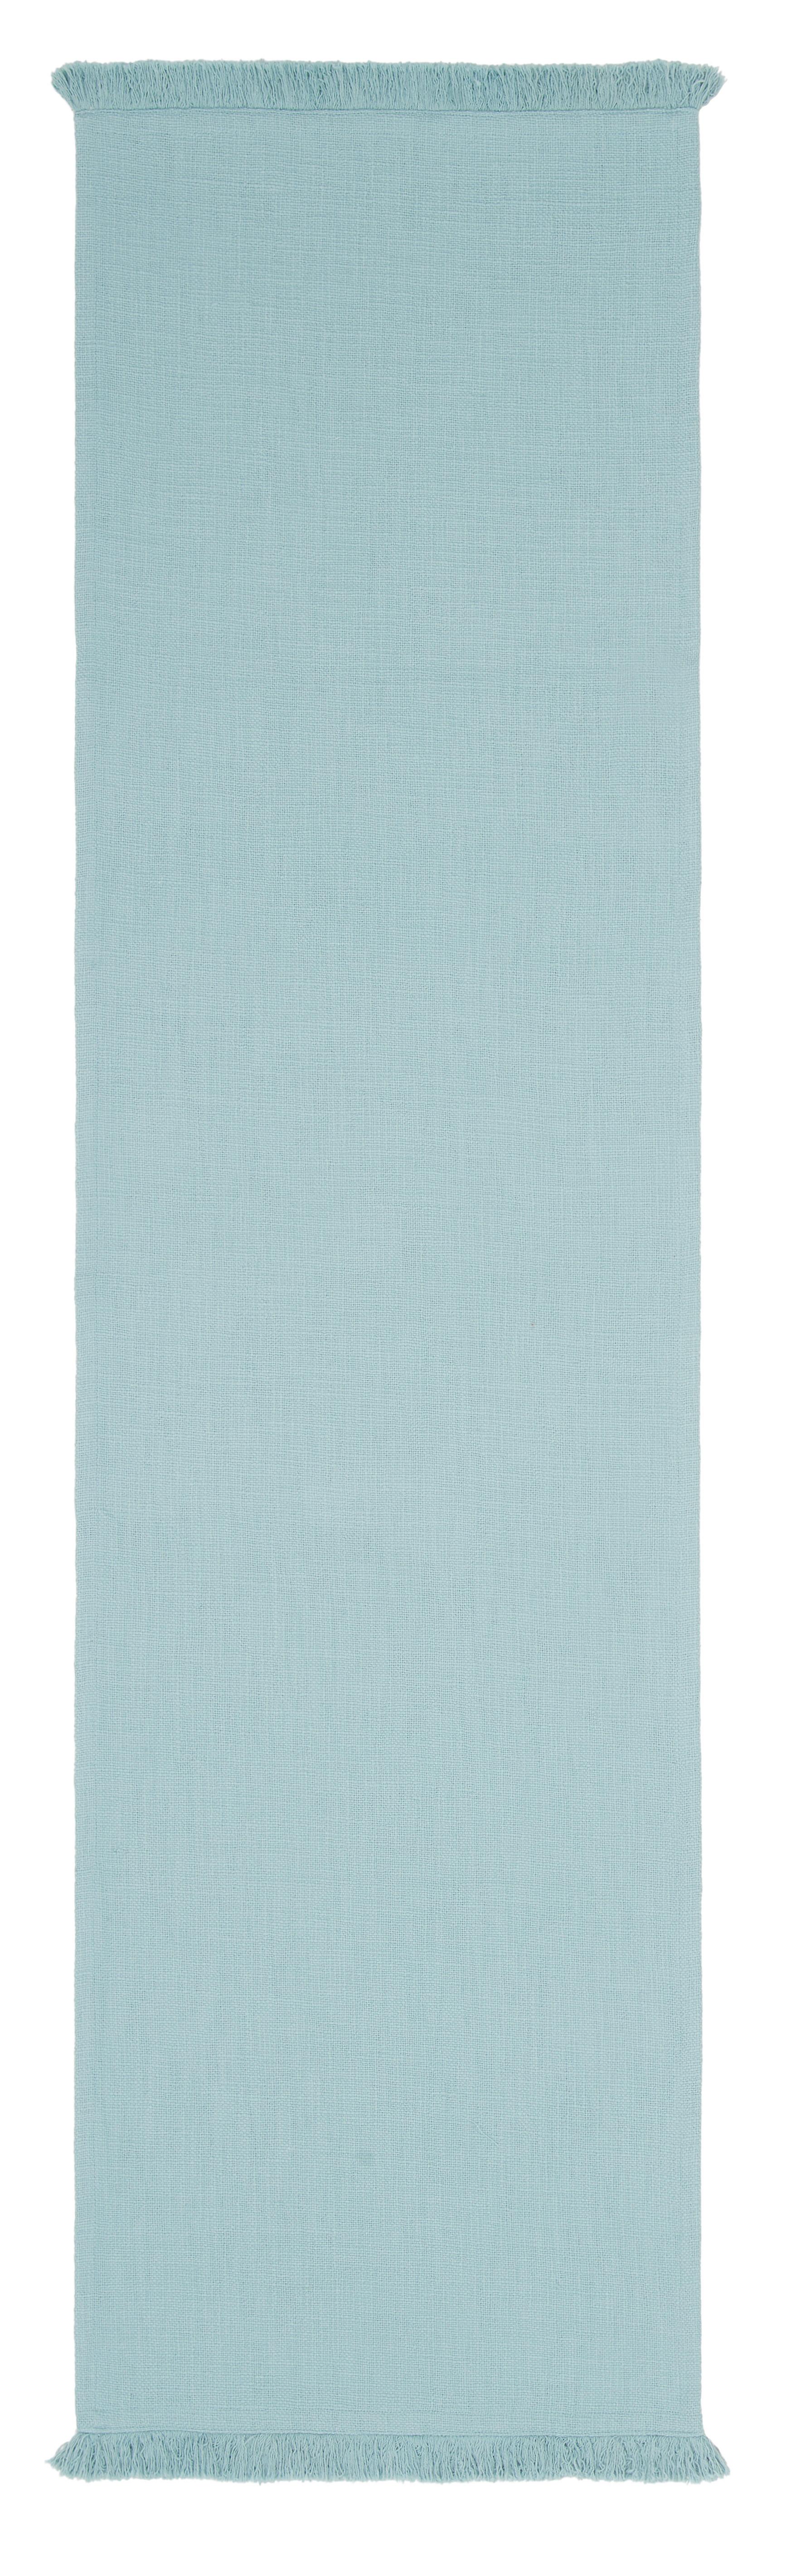 Nadprt Pablo - modra, Moderno, tekstil (45/170cm) - Premium Living